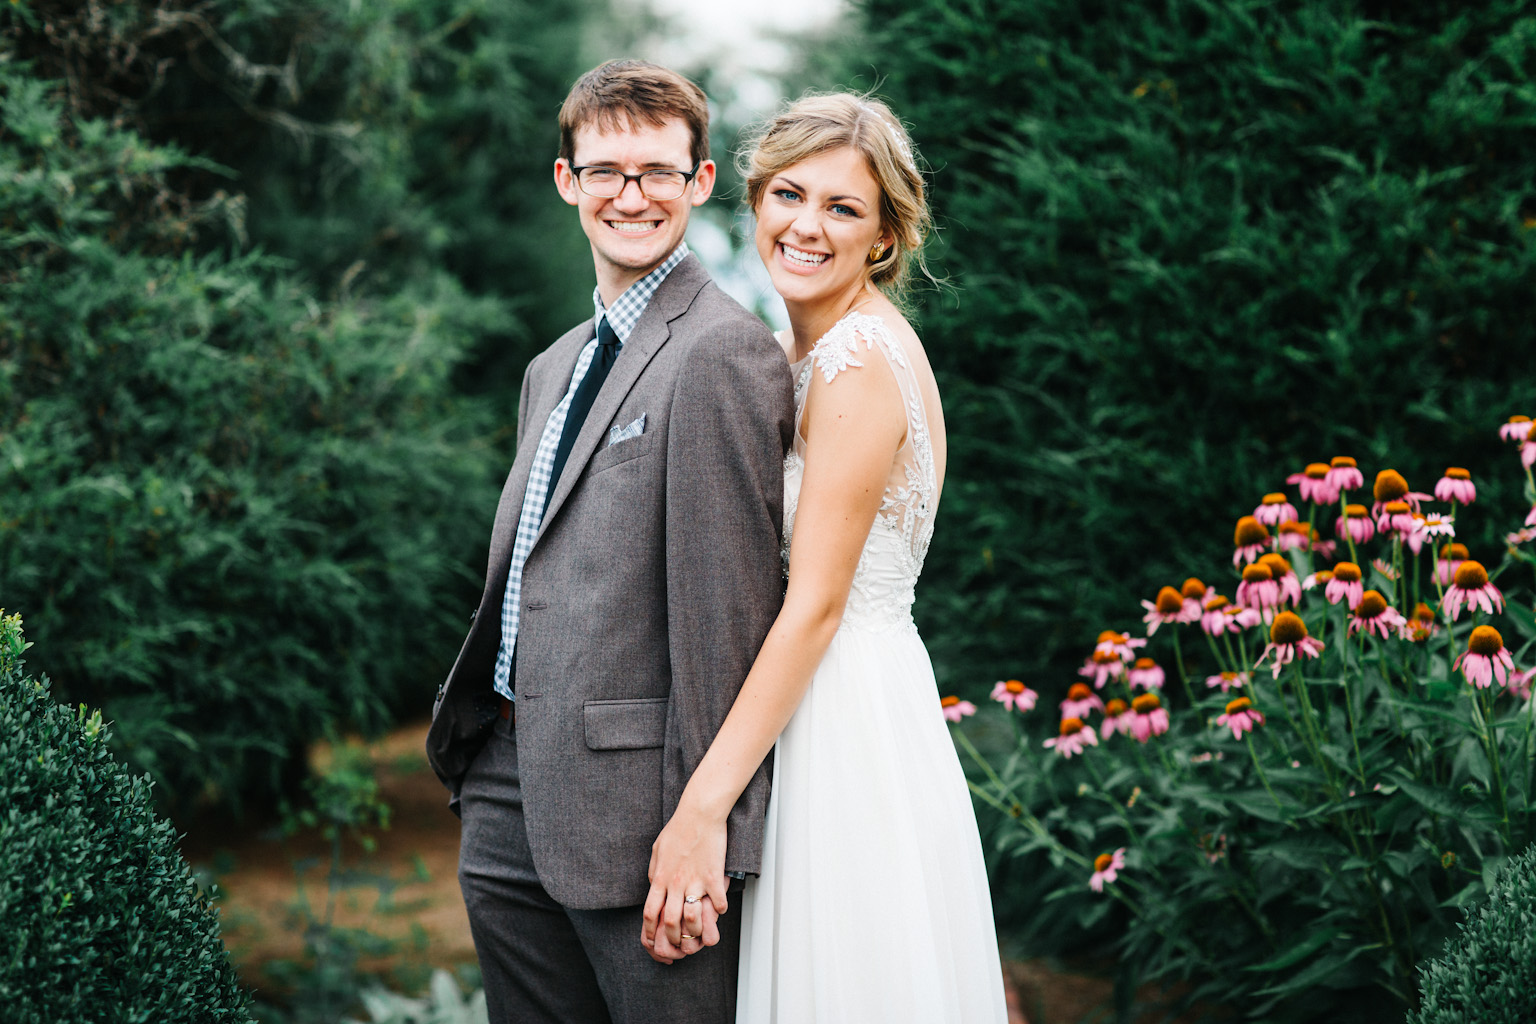 Carnton Plantation Wedding | Nashville Wedding Photographer Laura K. Allen Photography & Design